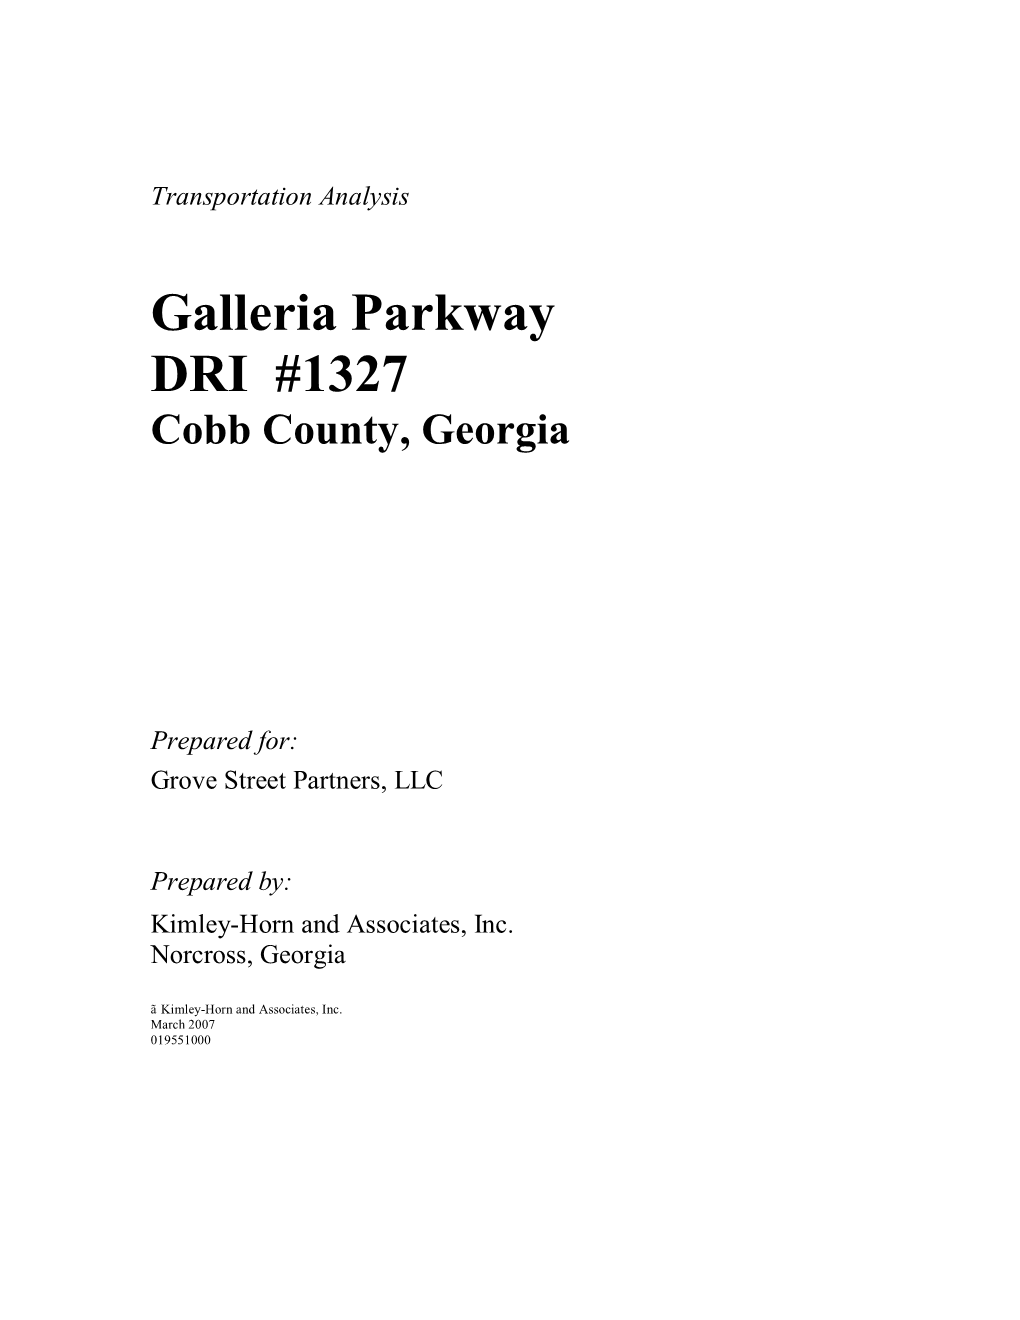 Galleria Parkway DRI #1327 Cobb County, Georgia